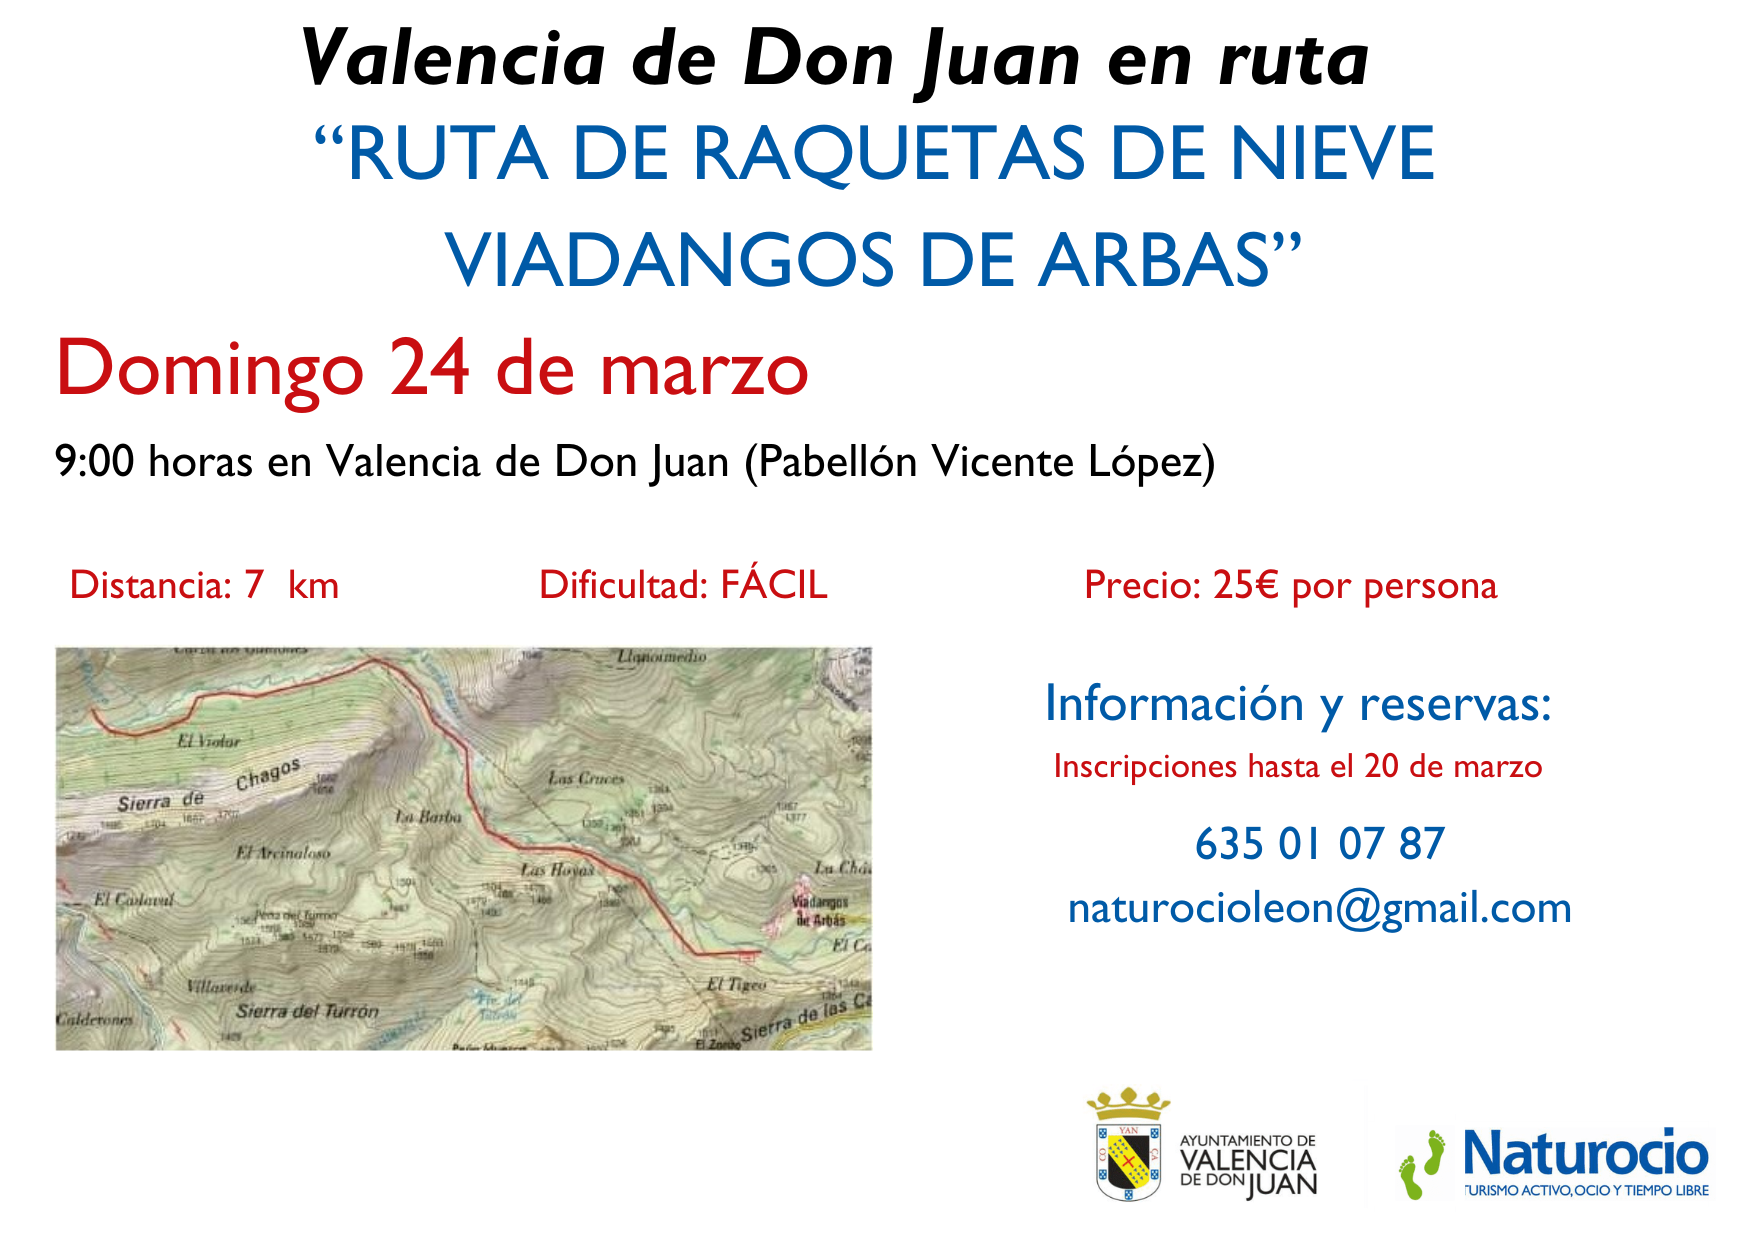 Valencia de Don Juan en ruta: “RUTA DE RAQUETAS DE NIEVE  VIADANGOS DE ARBAS”